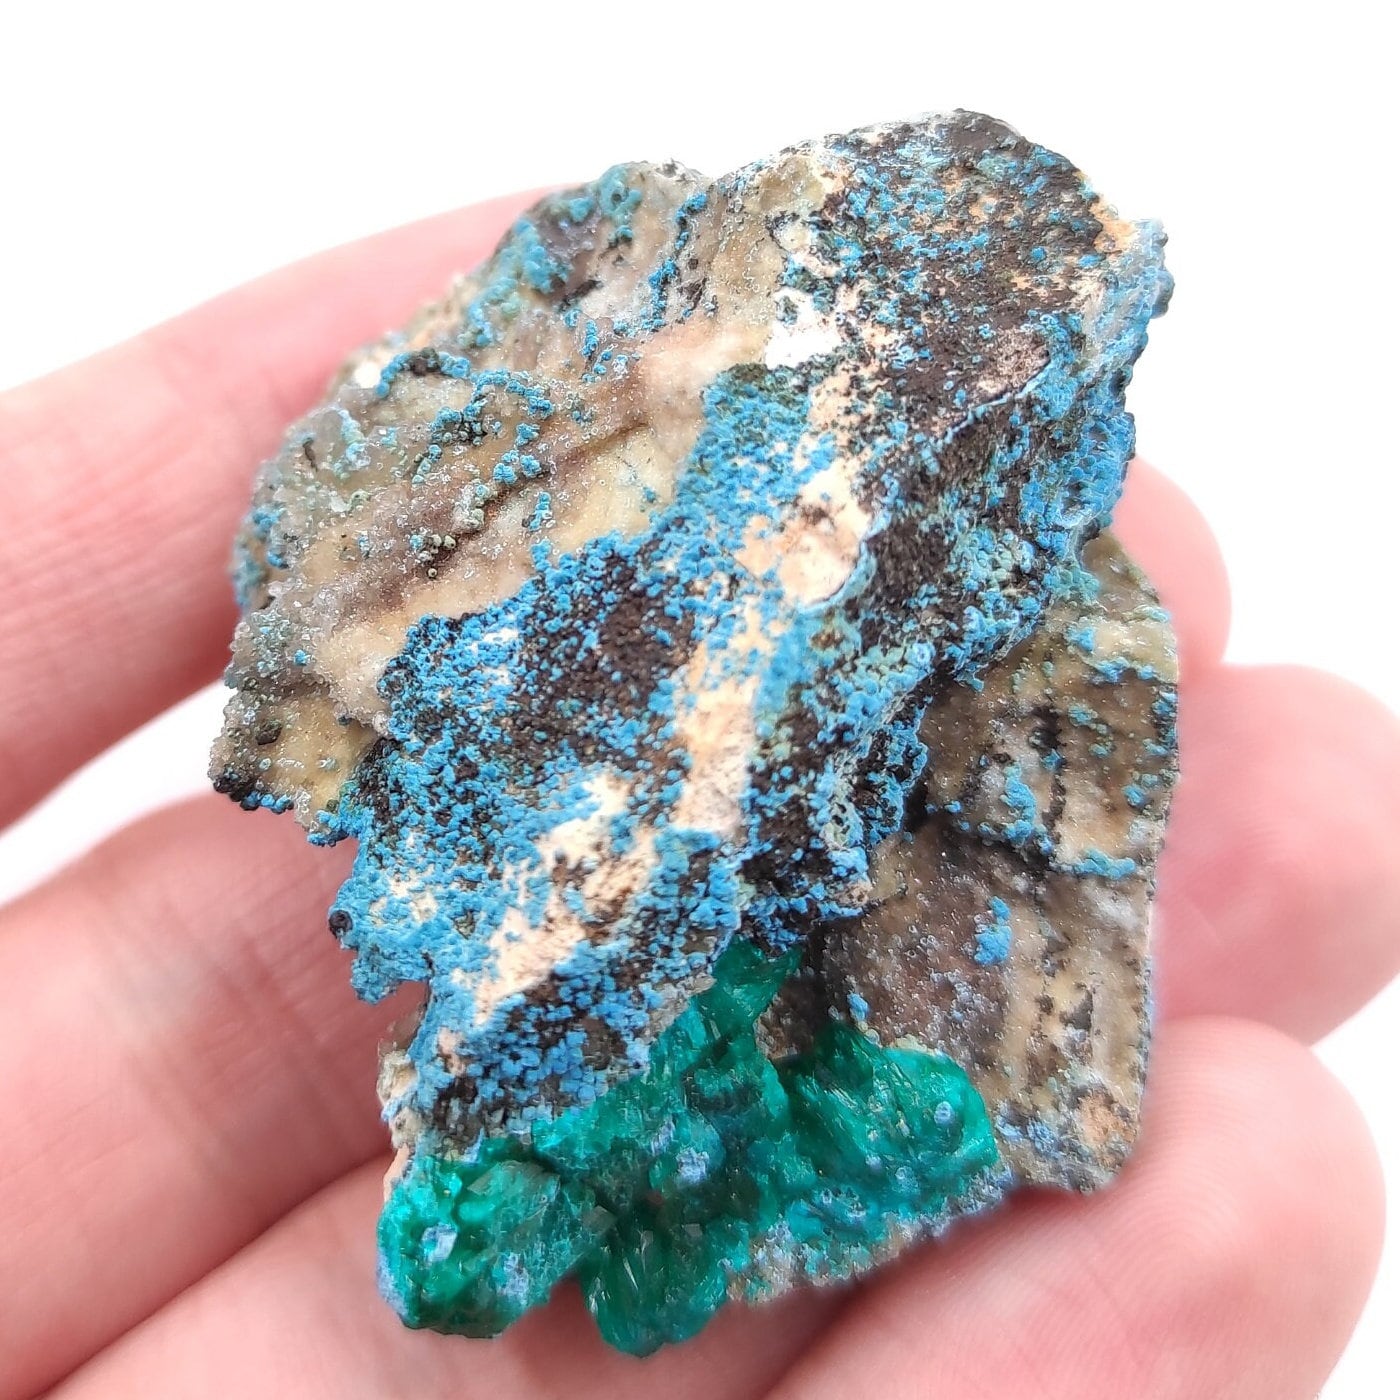 30g Dioptase in Chrysocolla - Dioptase from Sanda, Mindouli, Republic of Congo - Green Dioptase Crystal - Raw Dioptase Mineral Specimen